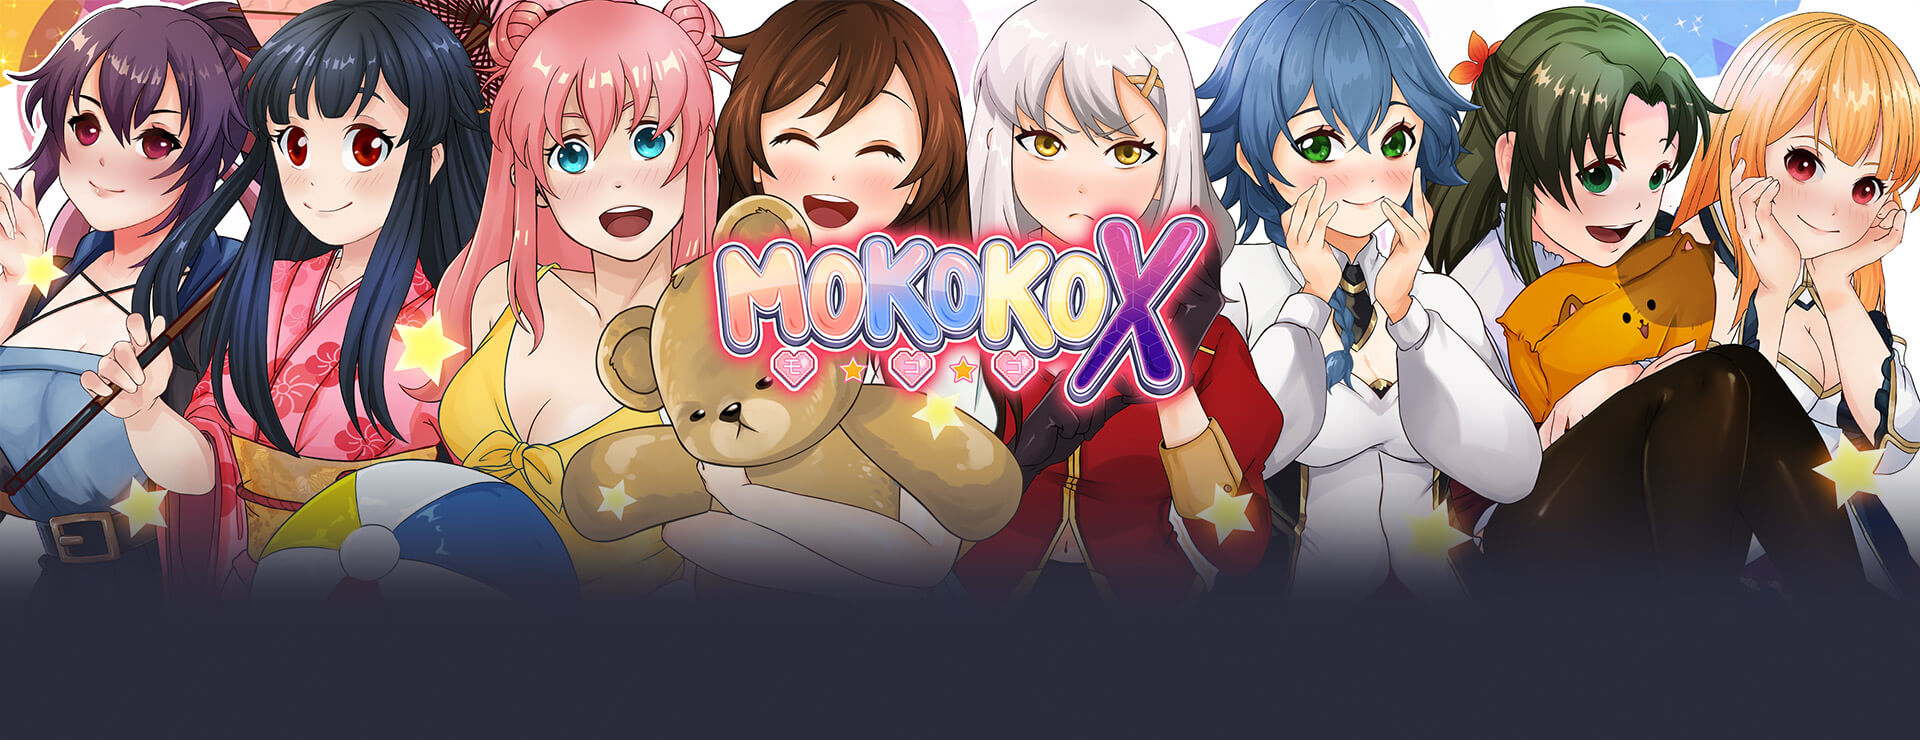 Mokoko X - Action Adventure Game